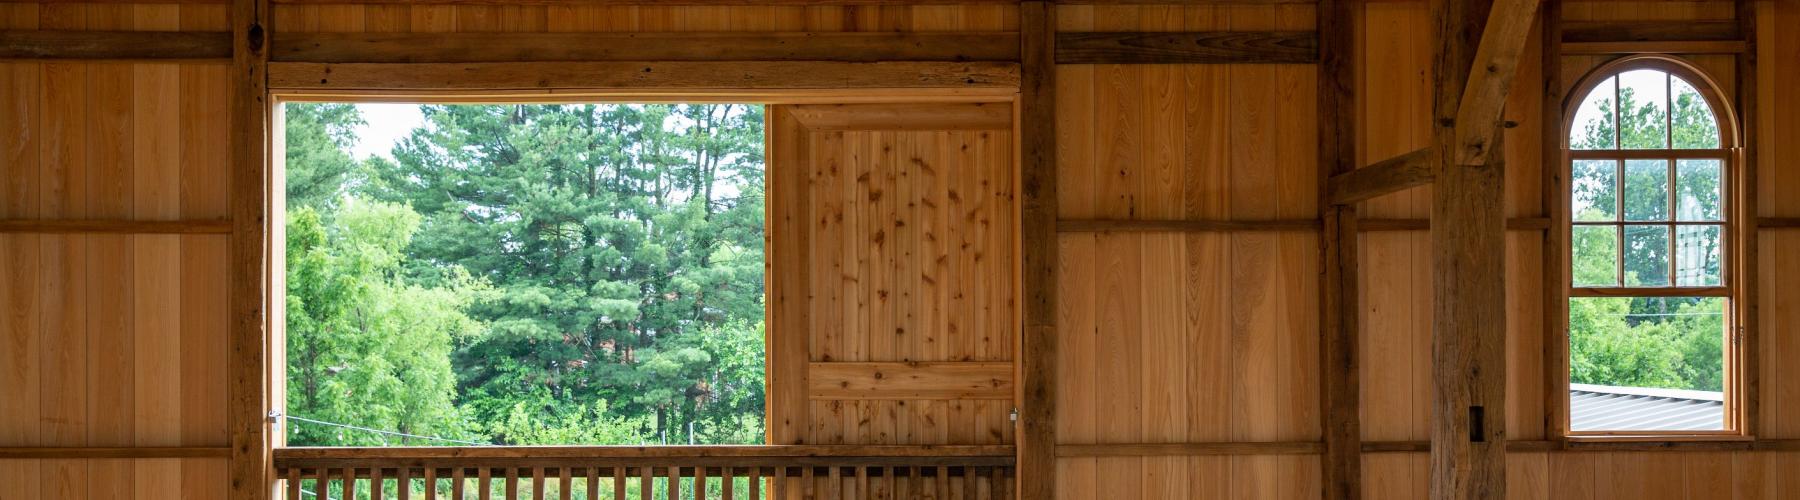 restored civil war era barn